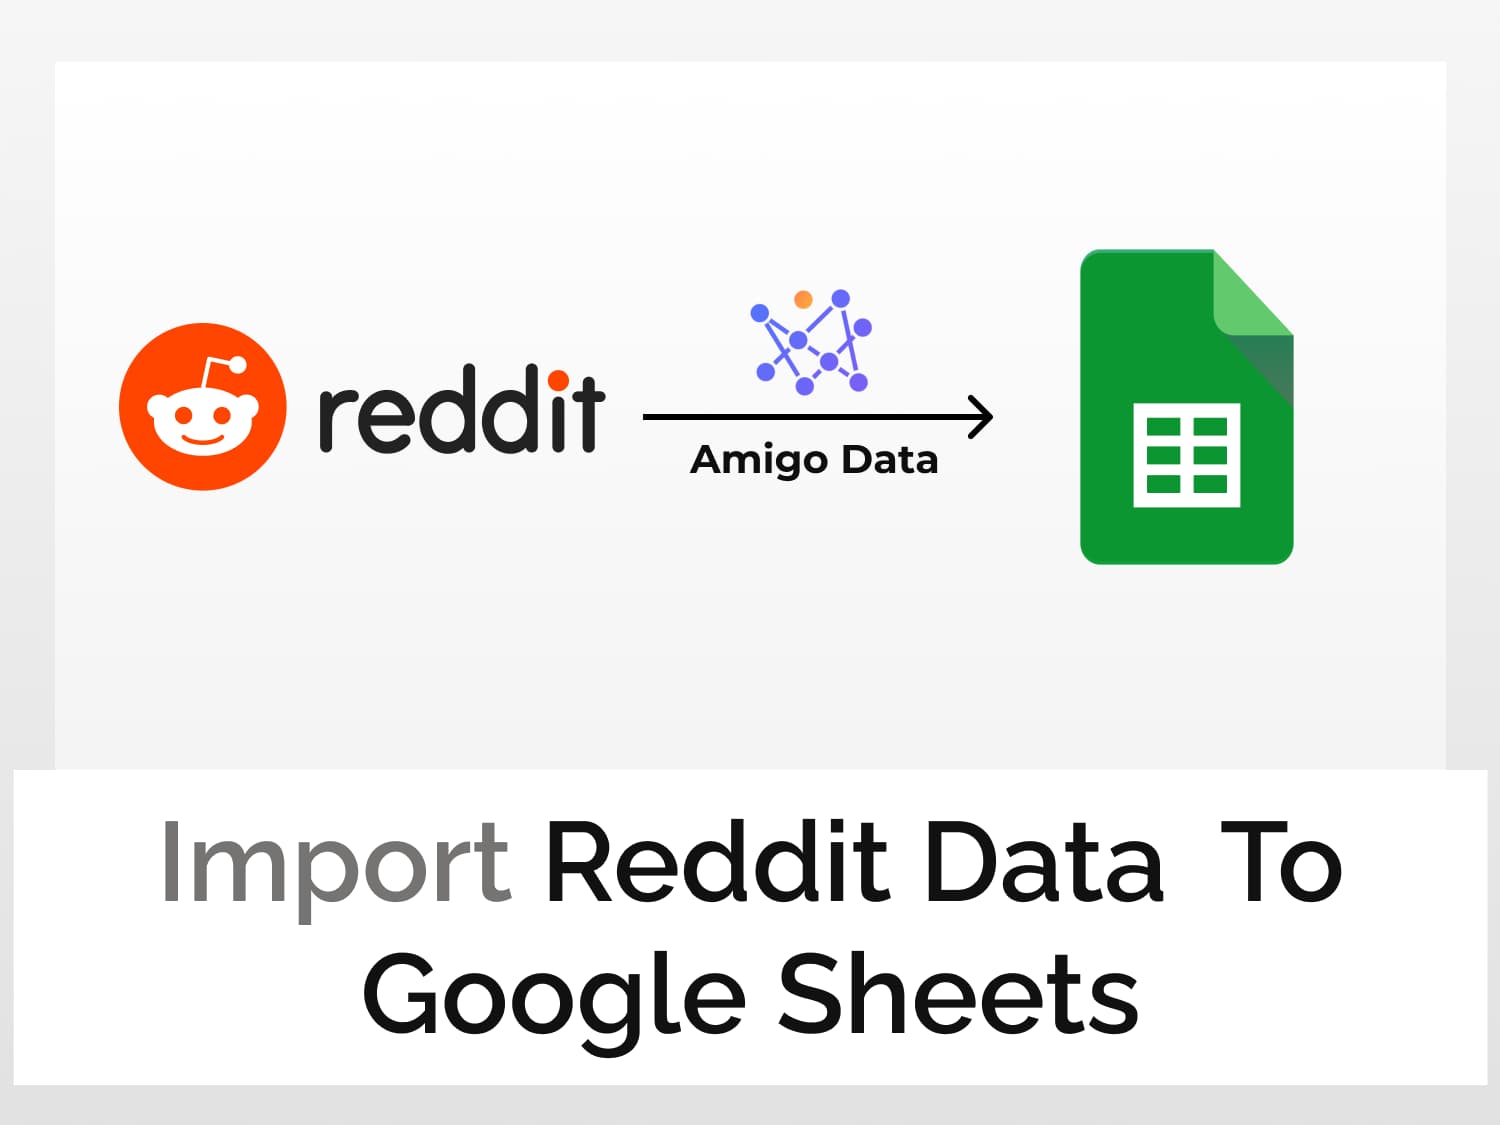 How to Iimport Reddit data to Google Sheets